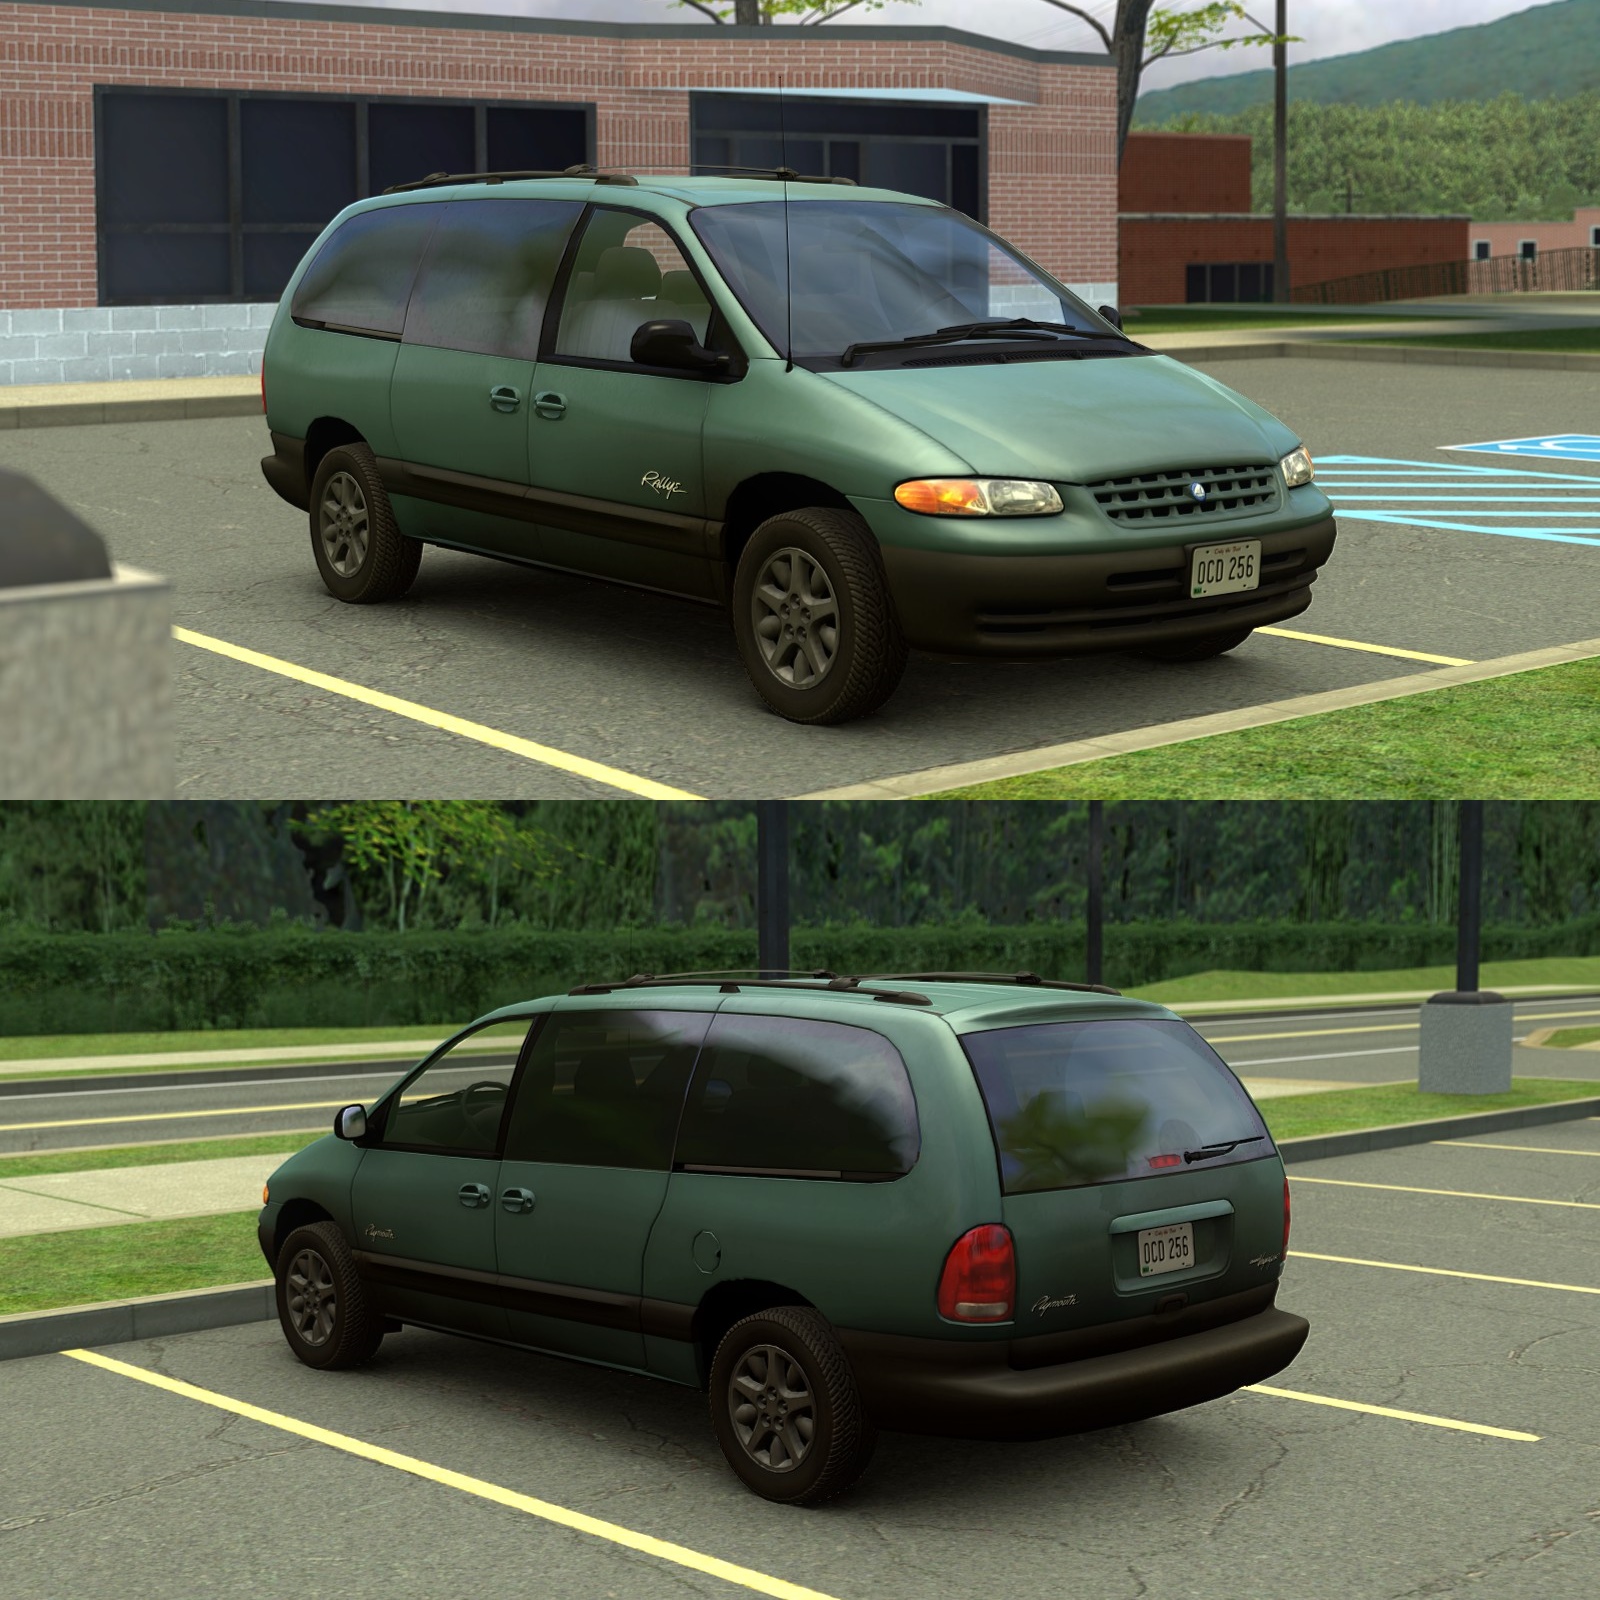 Model] 1996-2000 Plymouth Grand Voyager by RushFreak2 on DeviantArt